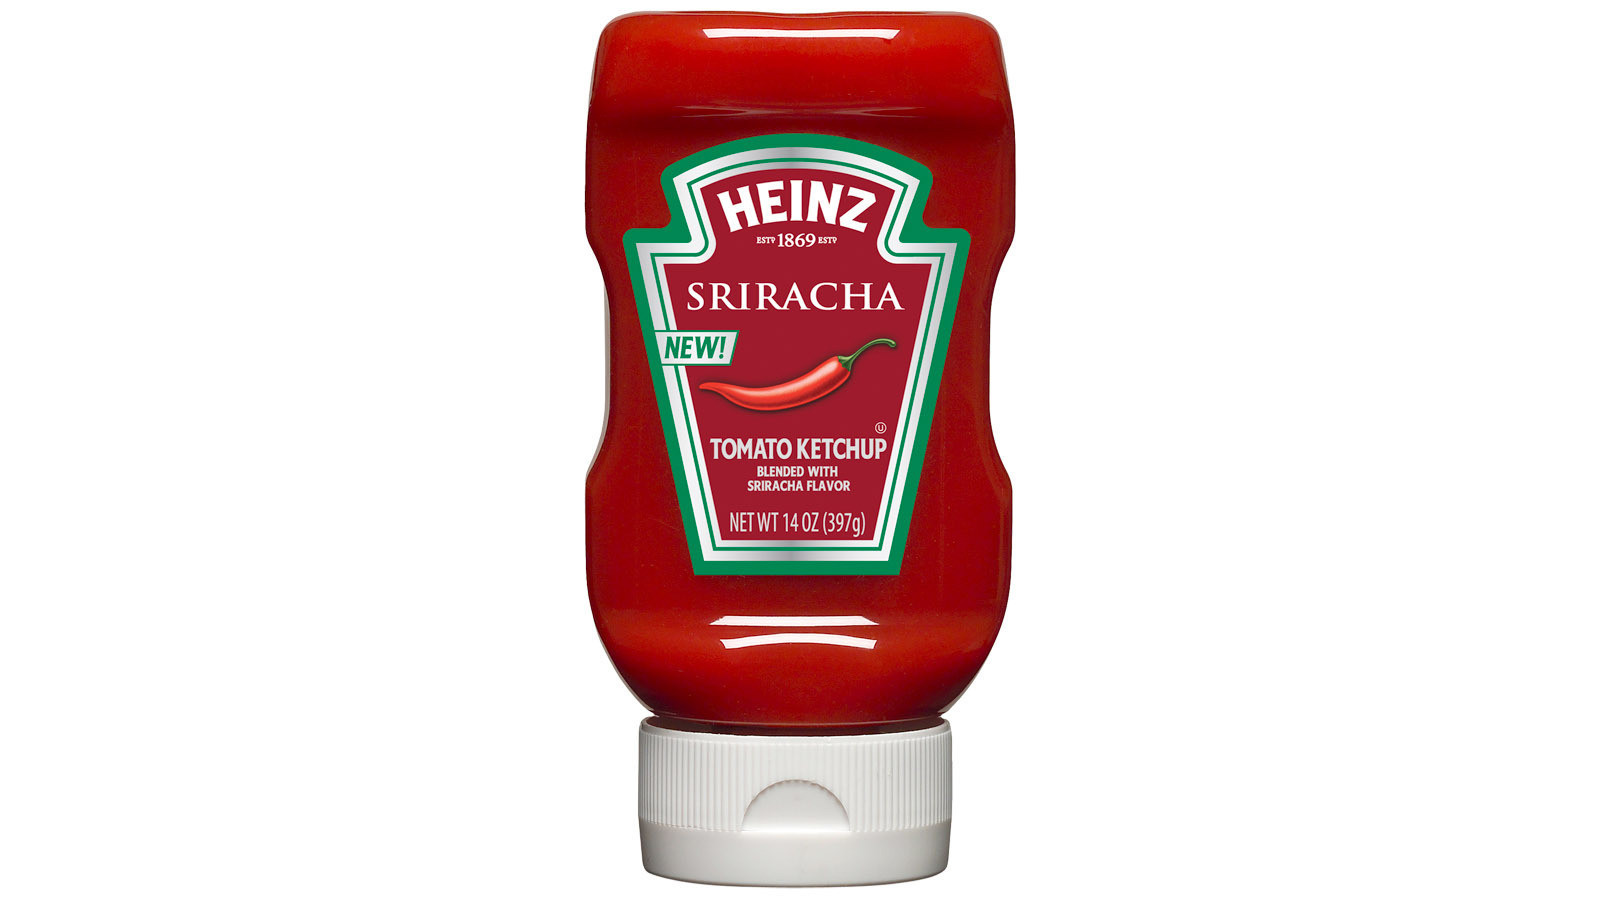 Heinz releases Sriracha ketchup - LA Times